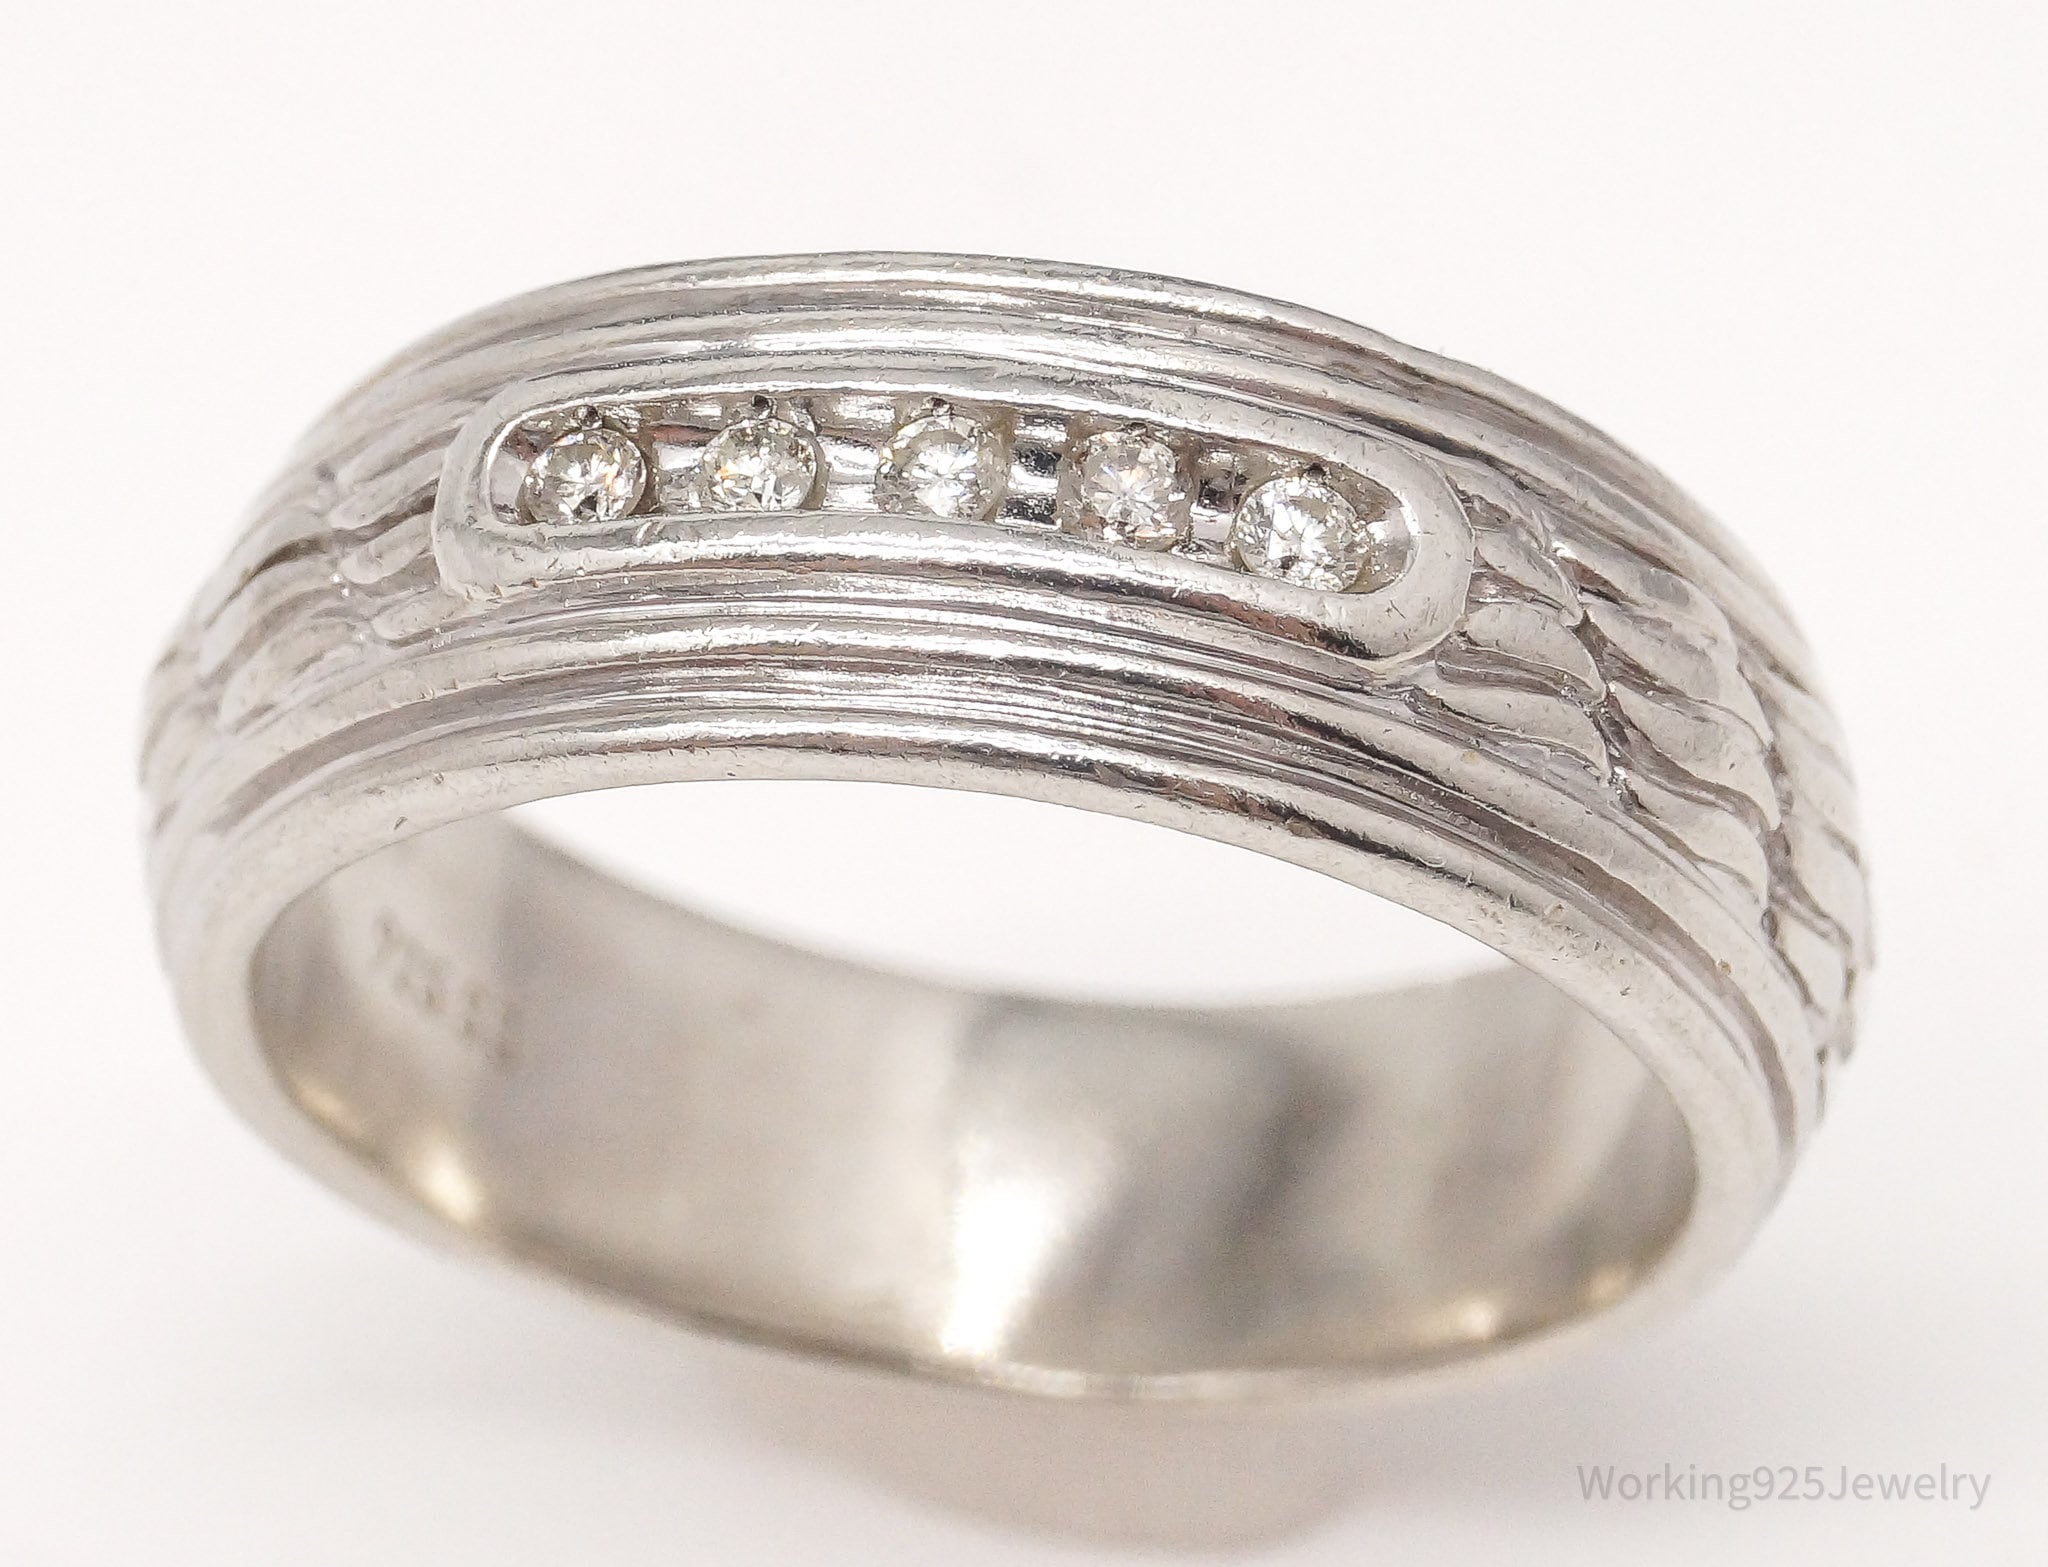 Vintage White Diamond Sterling Silver Ring - Size 9.5